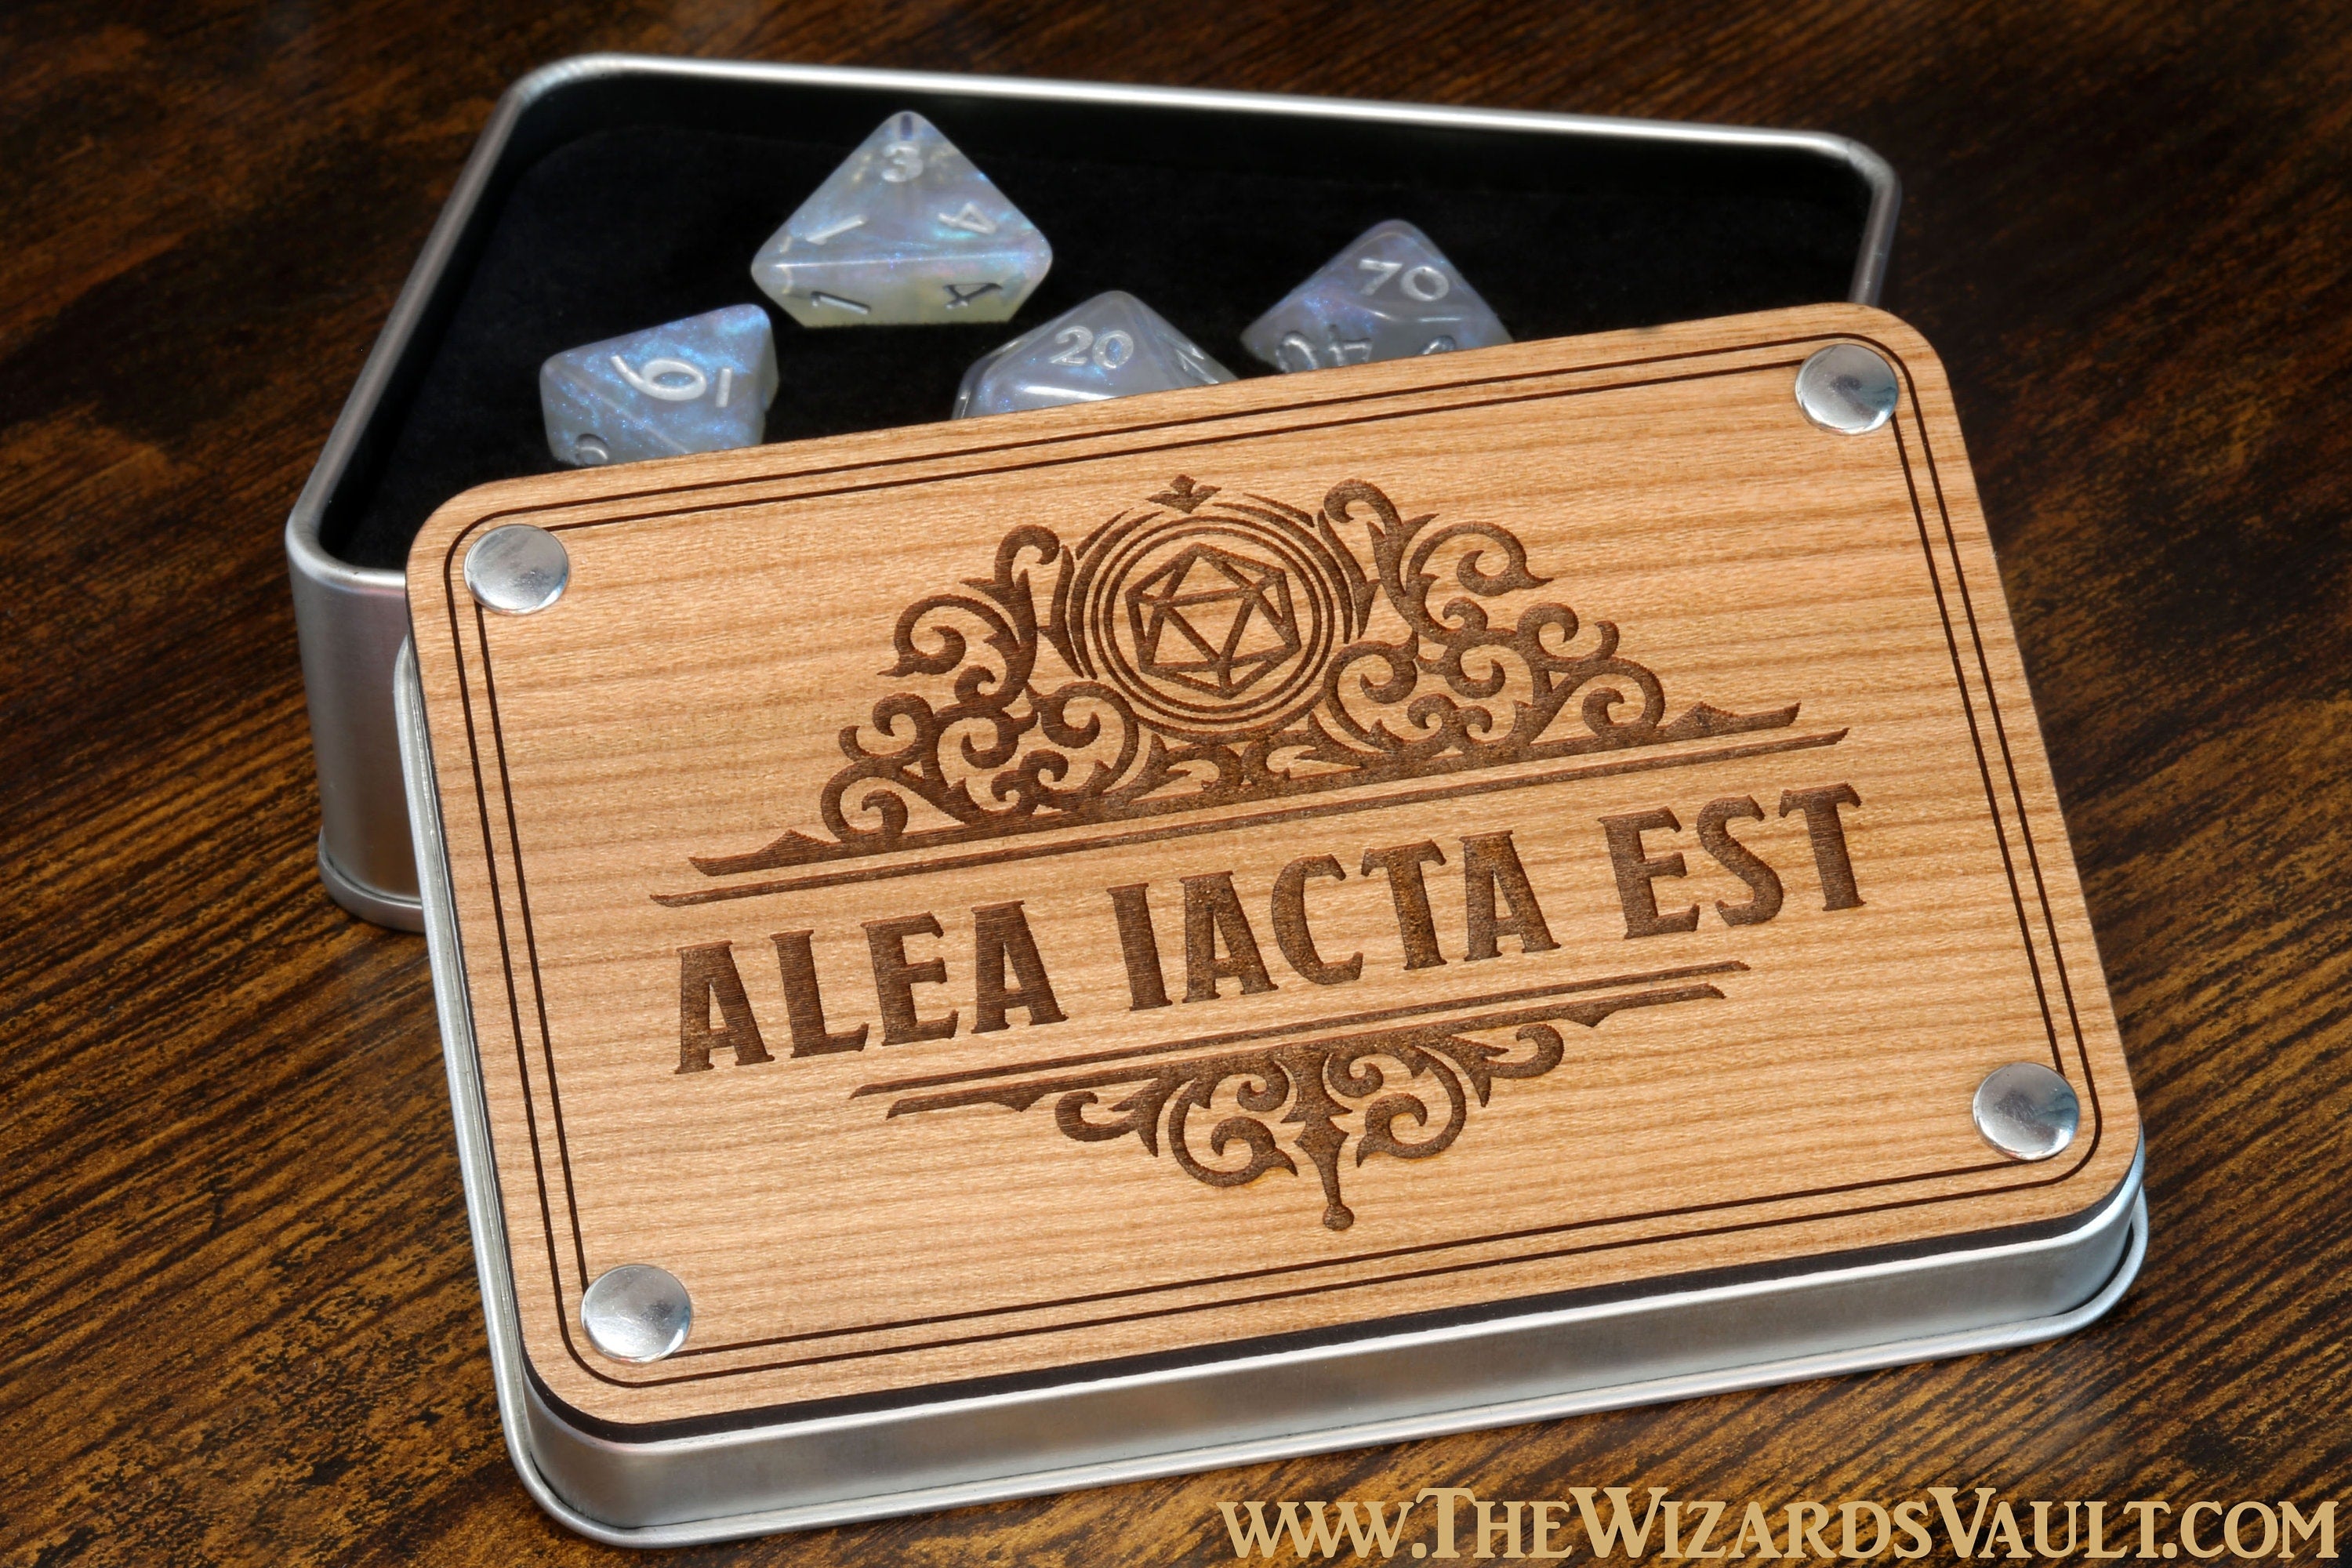 Alea Iacta Est engraved dice box and Divine Radiance dice set